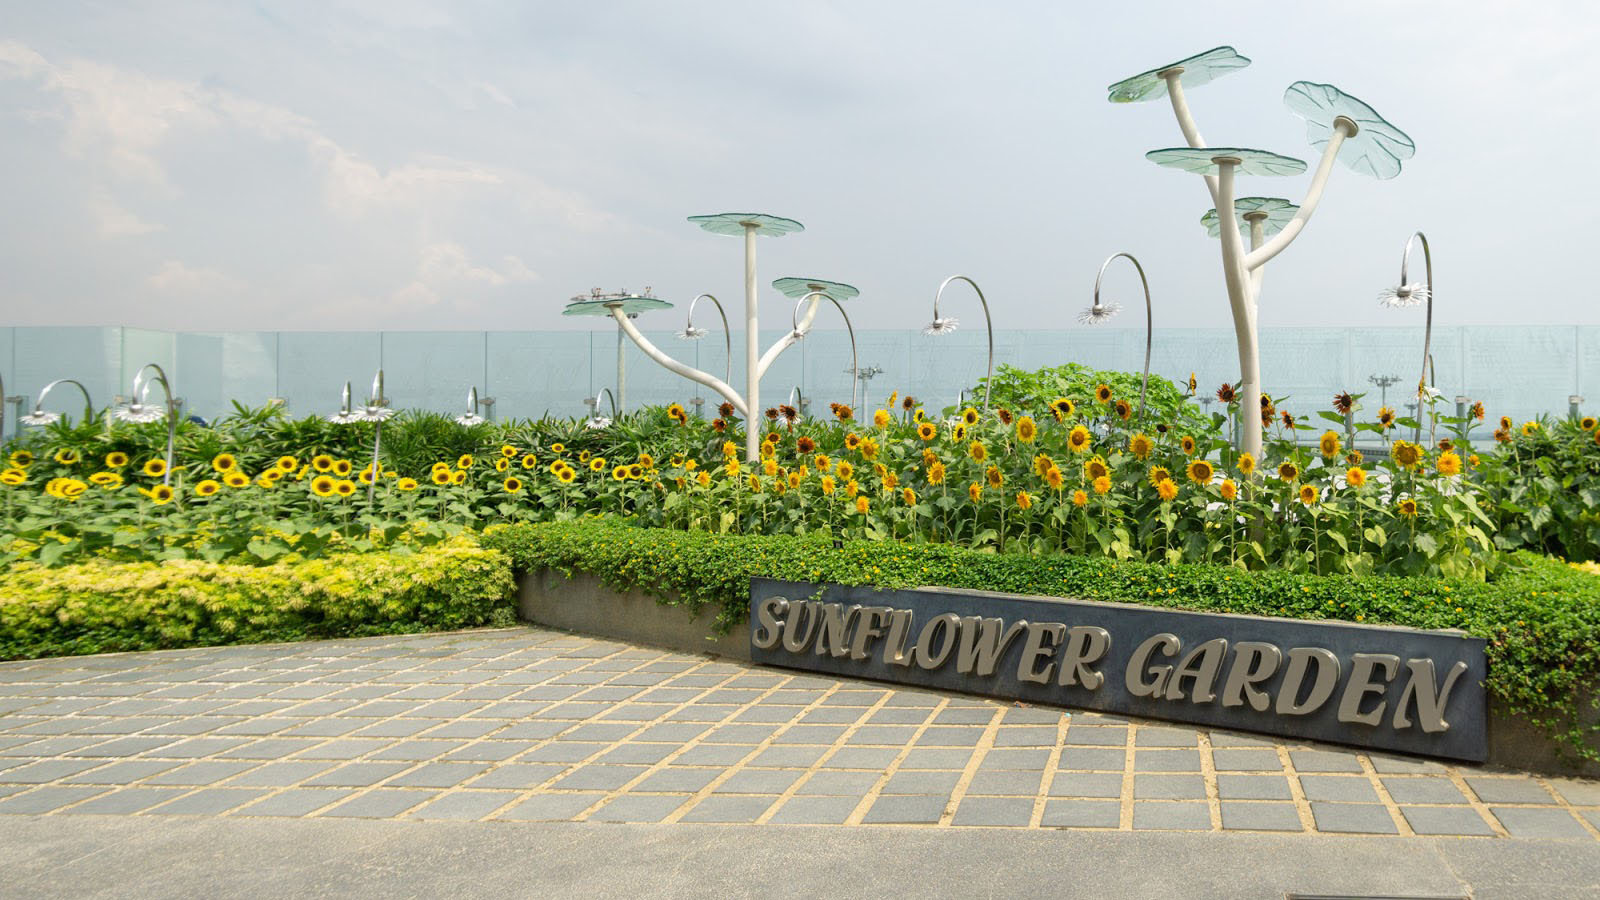 Changi Airport - Terminal 2 Sunflower Garden